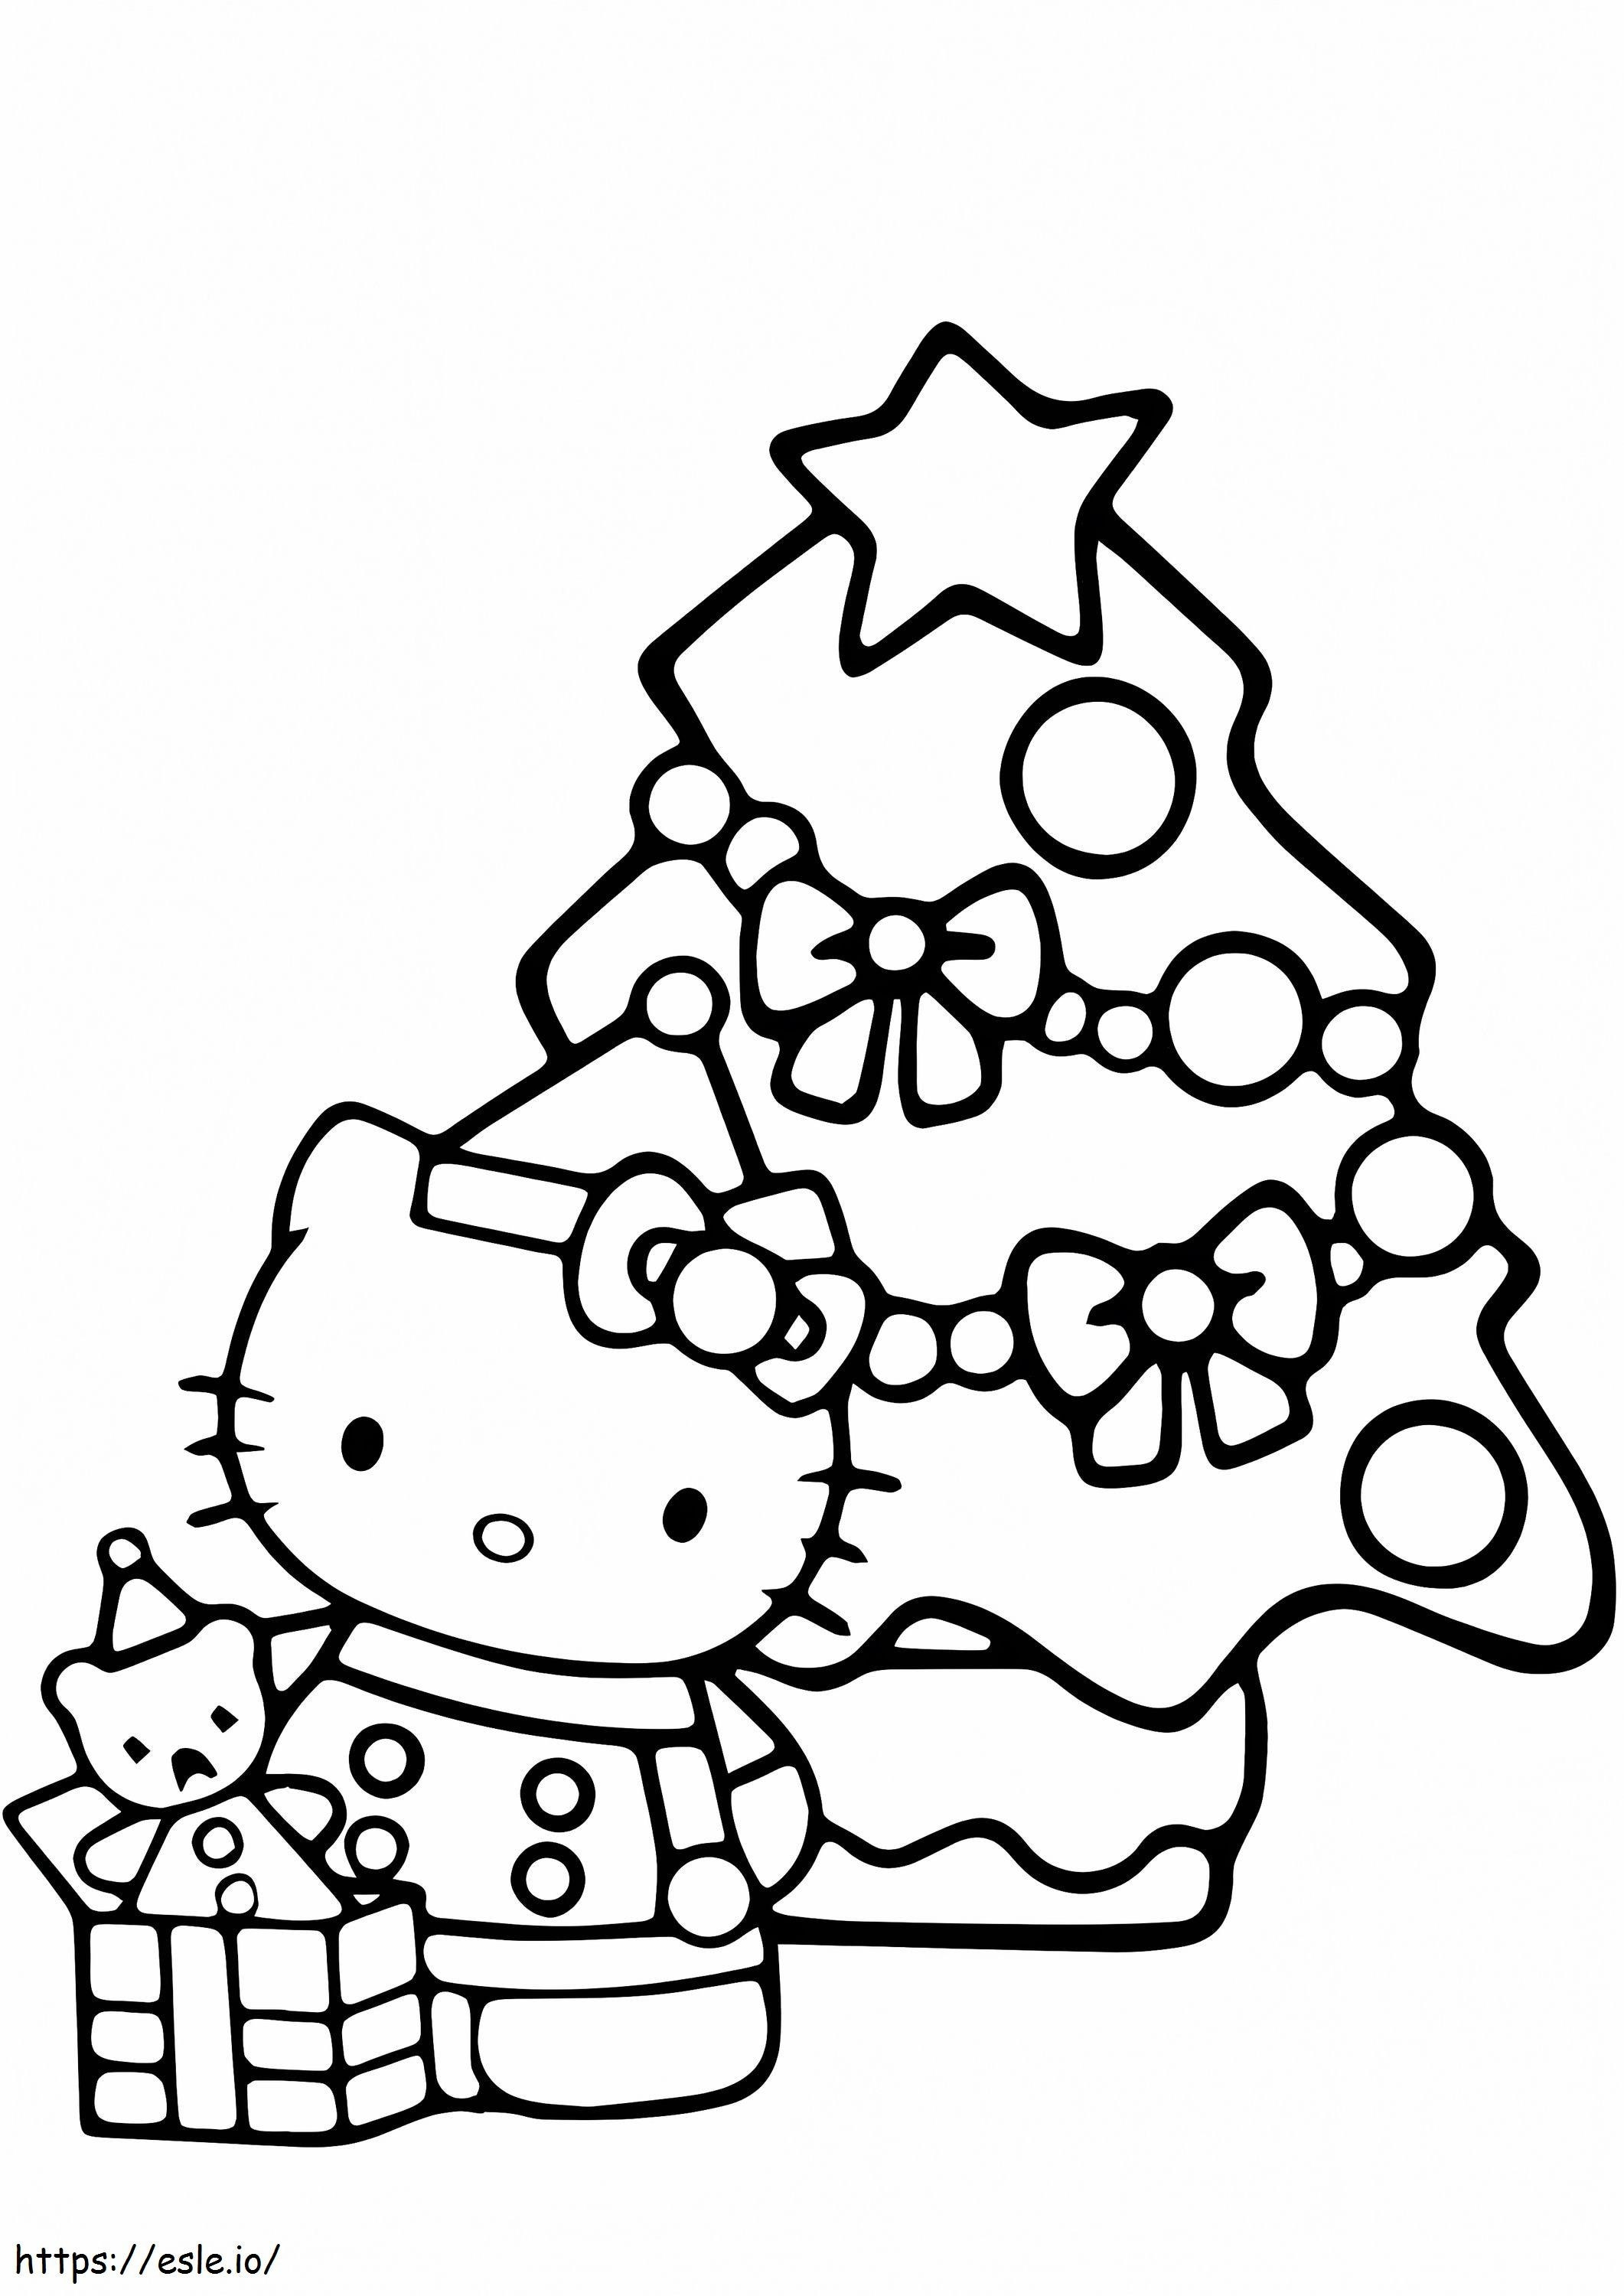 Christmas Hello Kitty coloring page